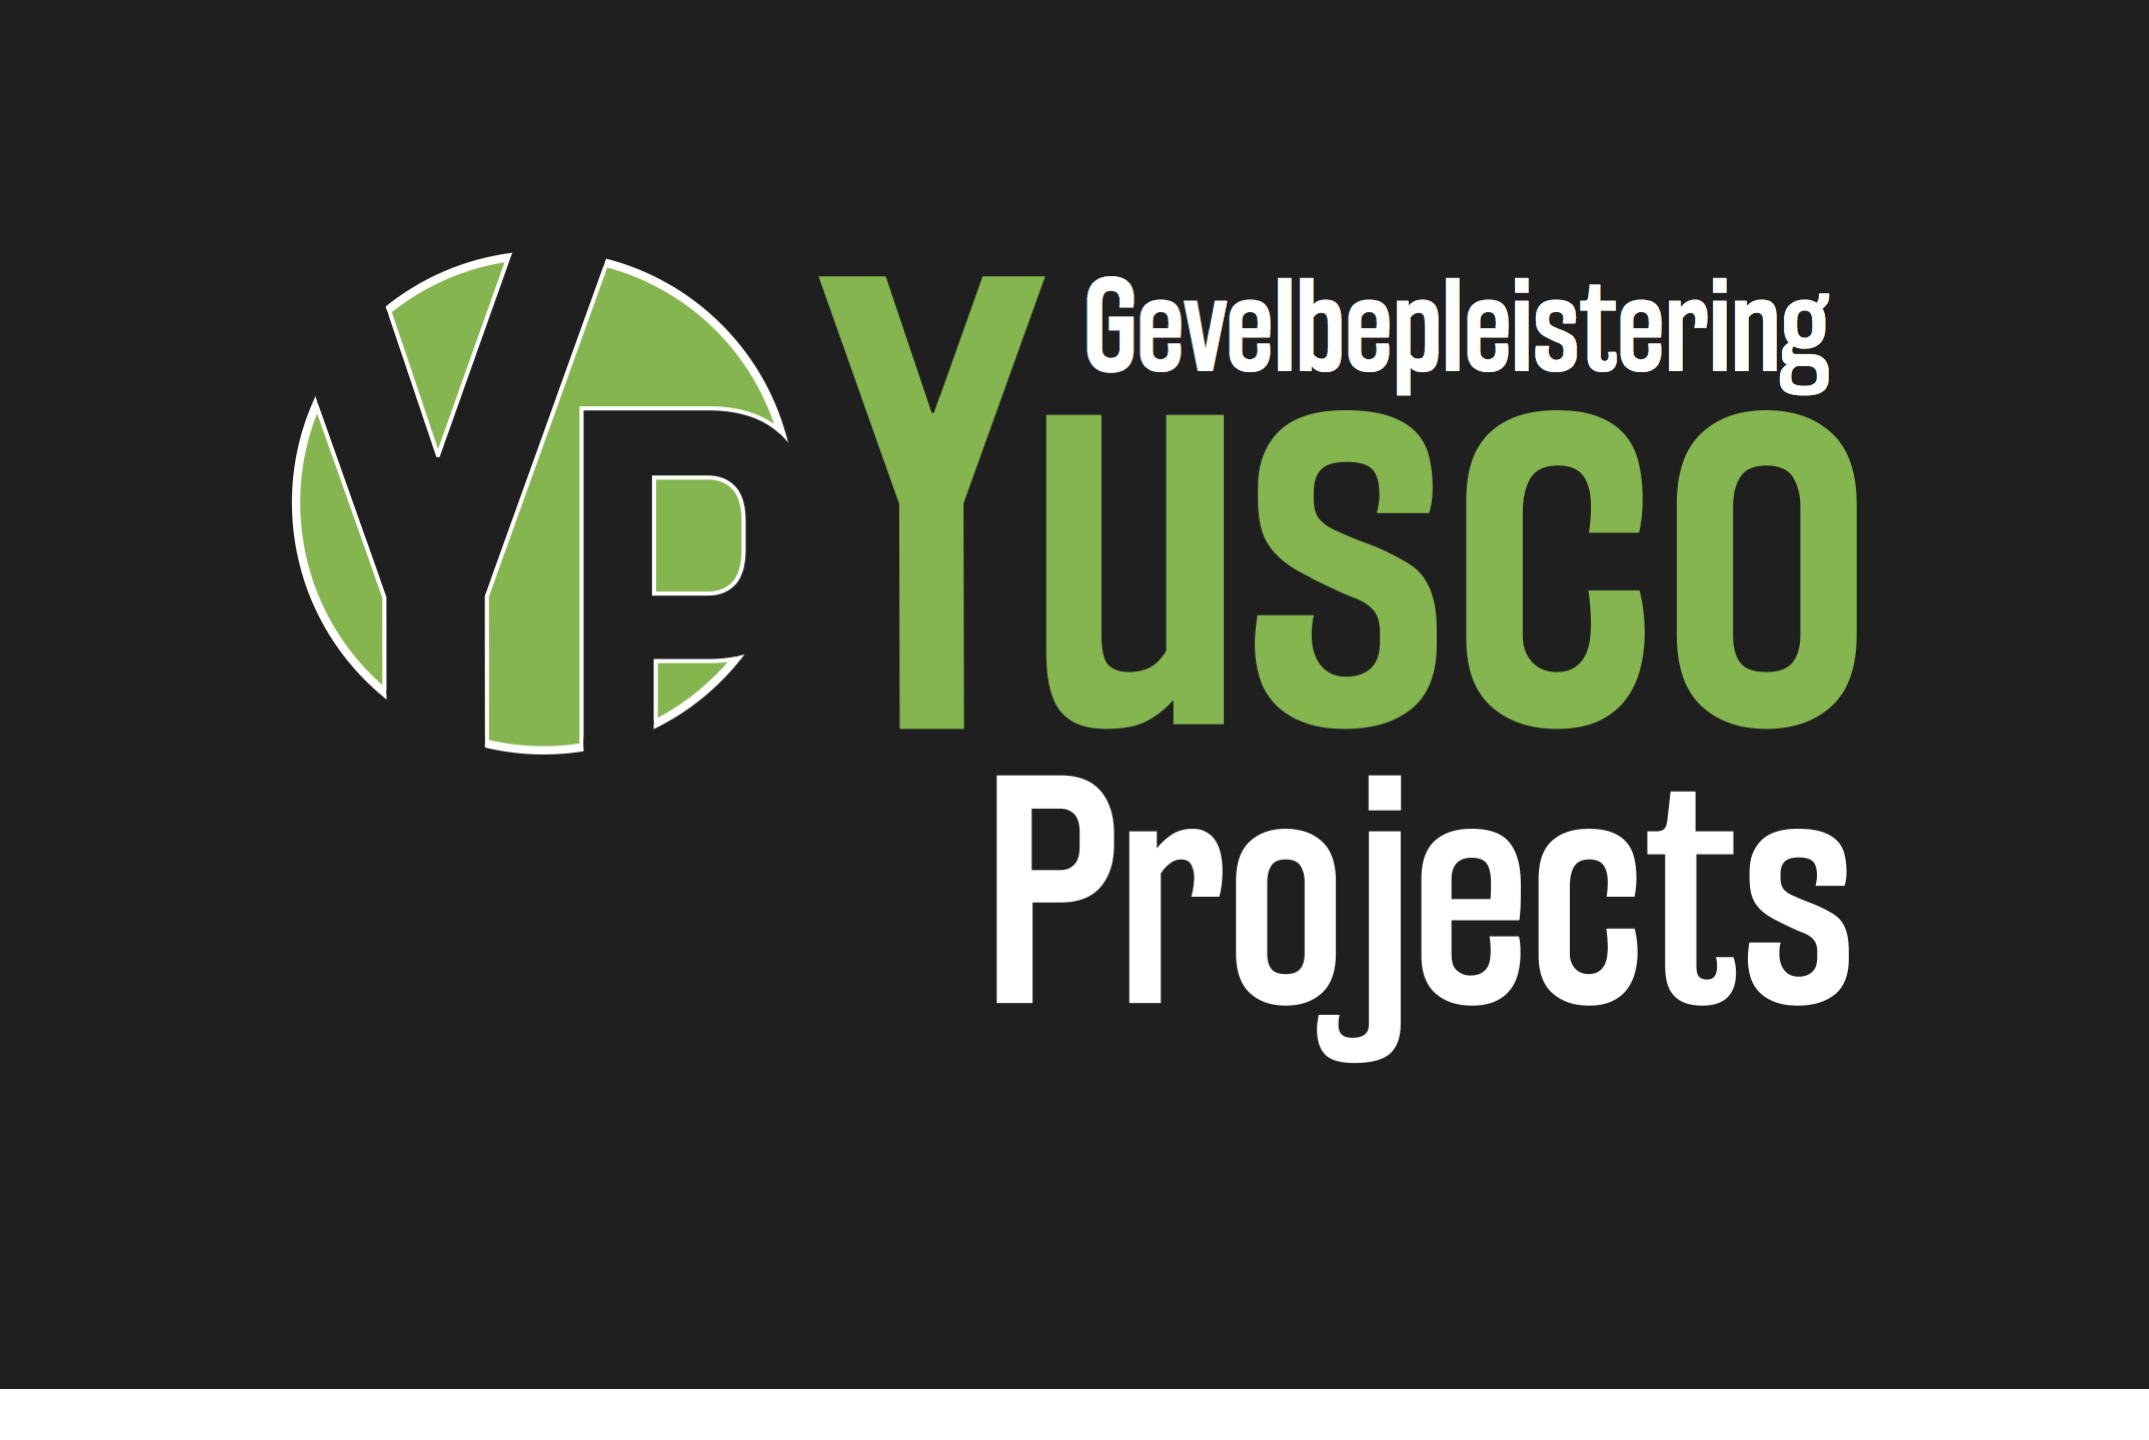 gevelreinigers Welle Yusco Projects Gevelbepleistering